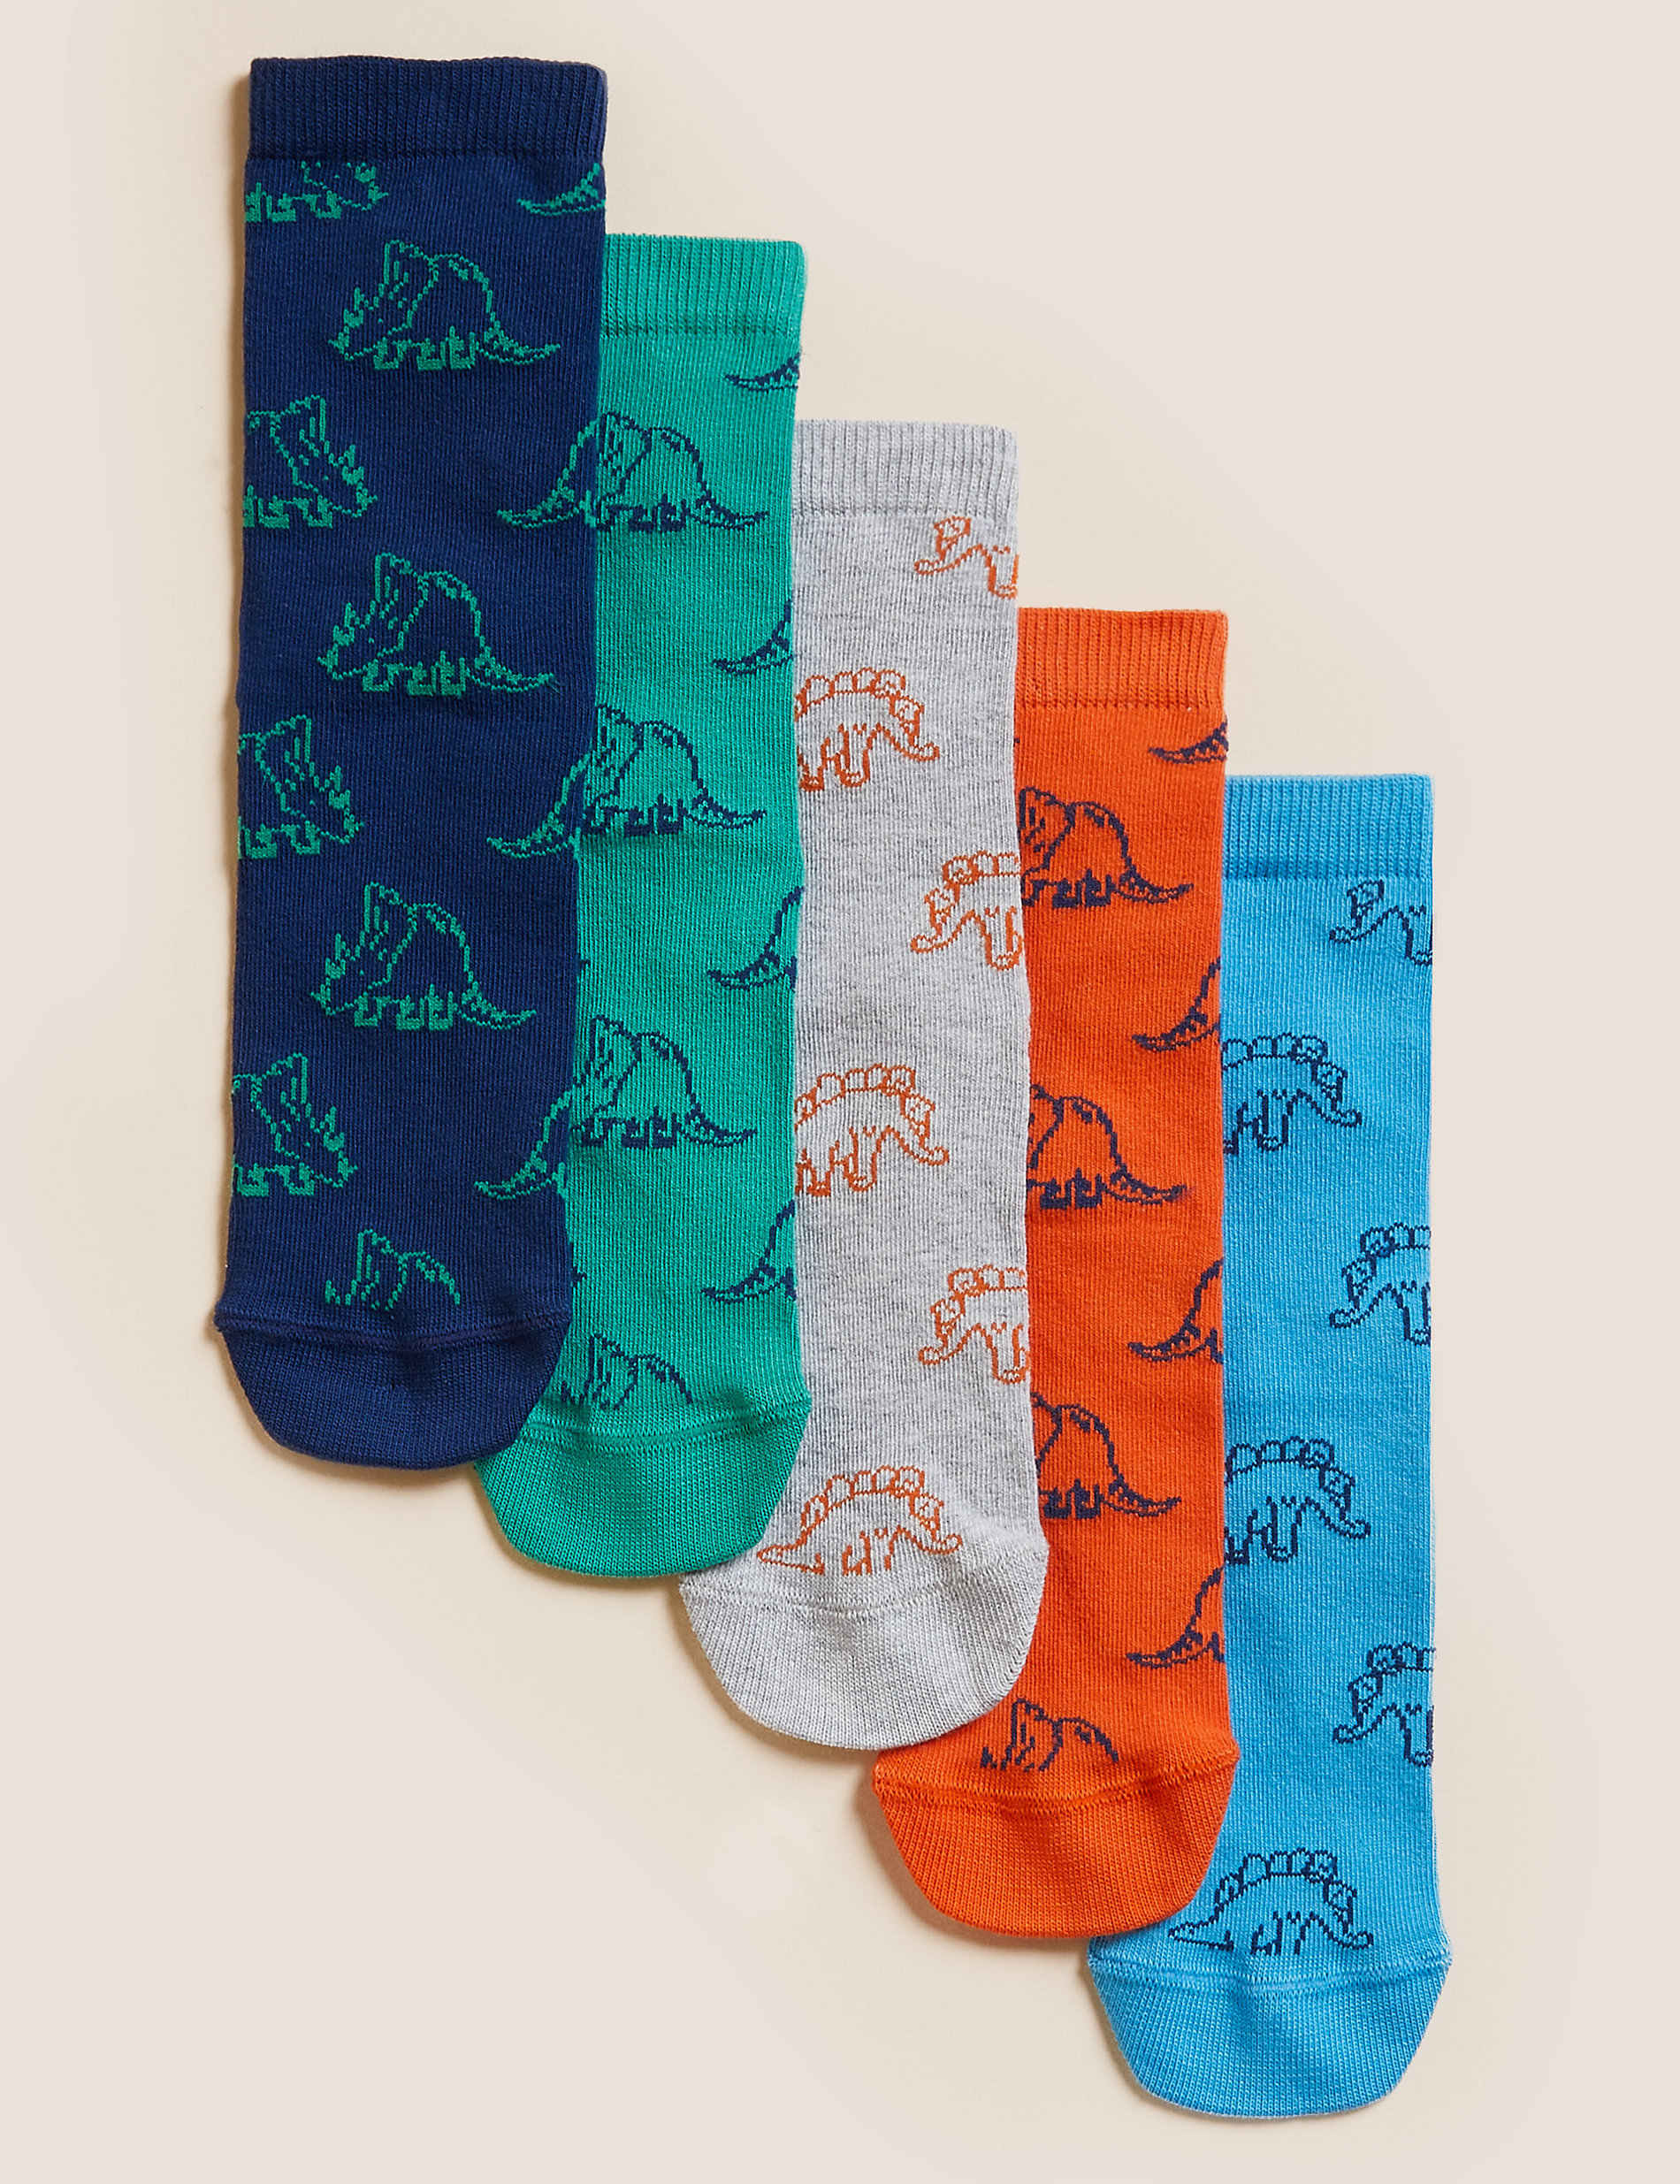 Marks & Spencer Clothing Underwear Socks 5pk Cotton Rich Dinosaur Socks 